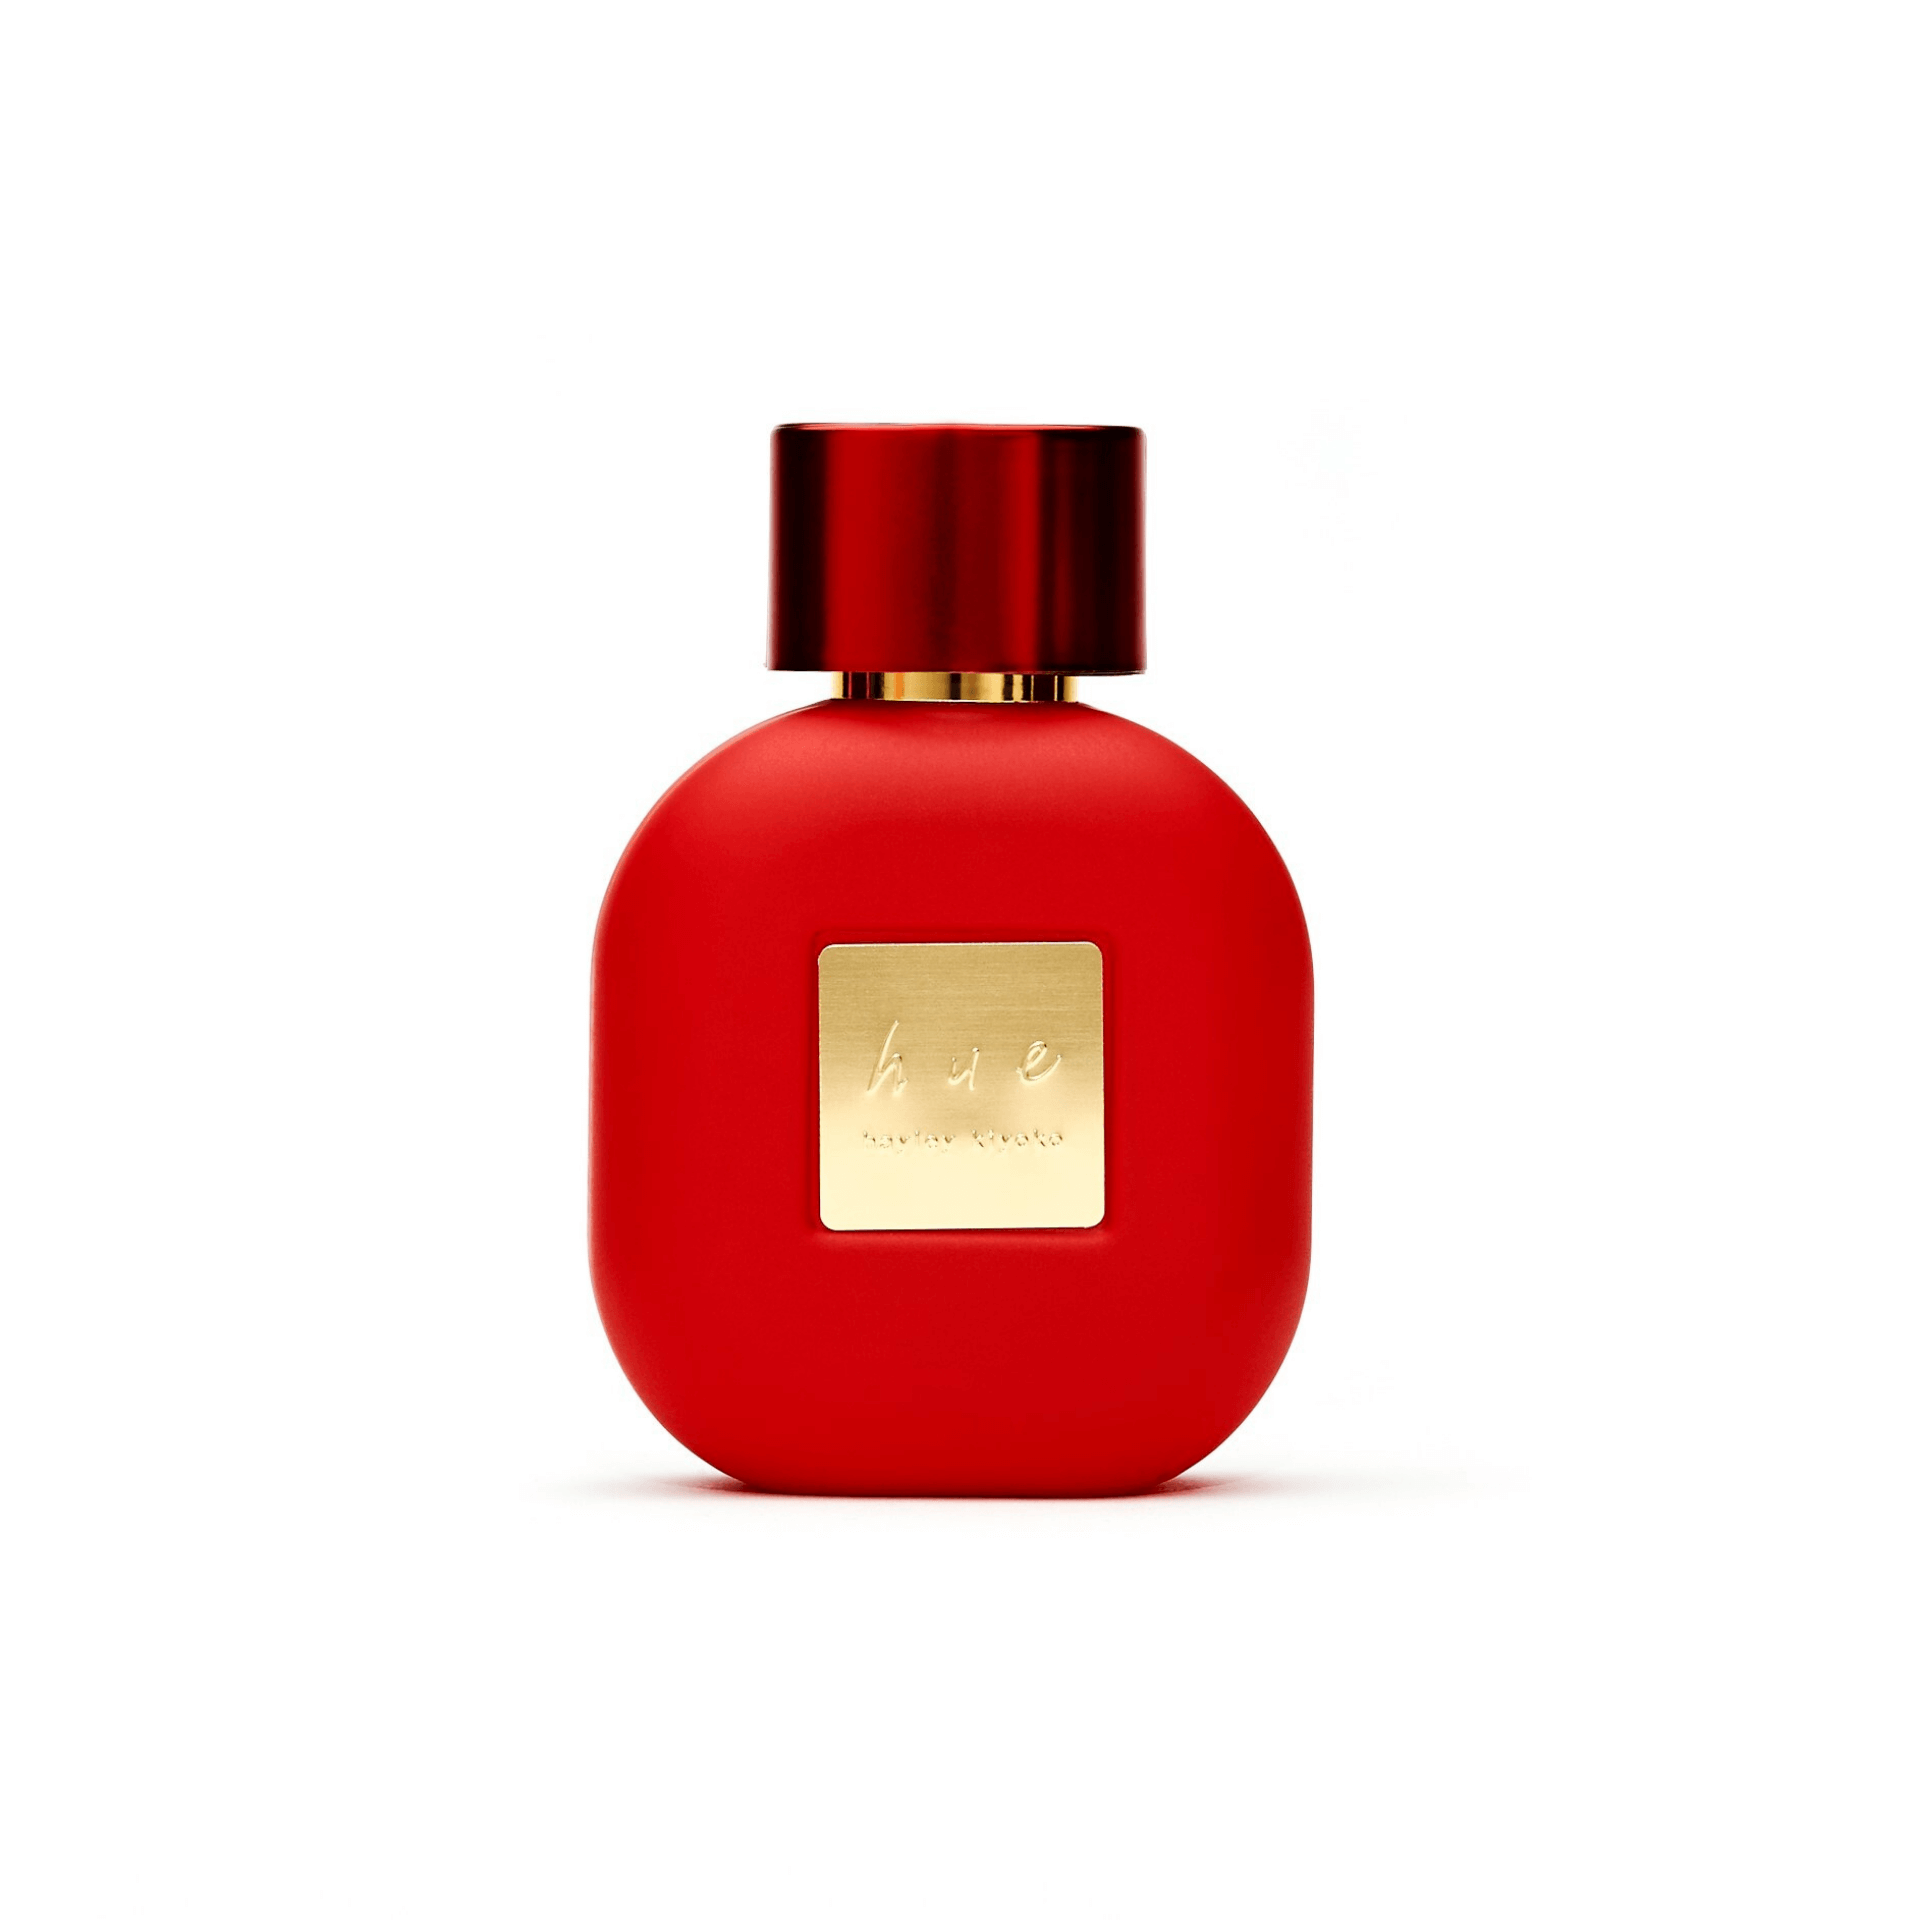 Hue by Hayley perfume created by celebrity pop-star Hayley Kiyoko.